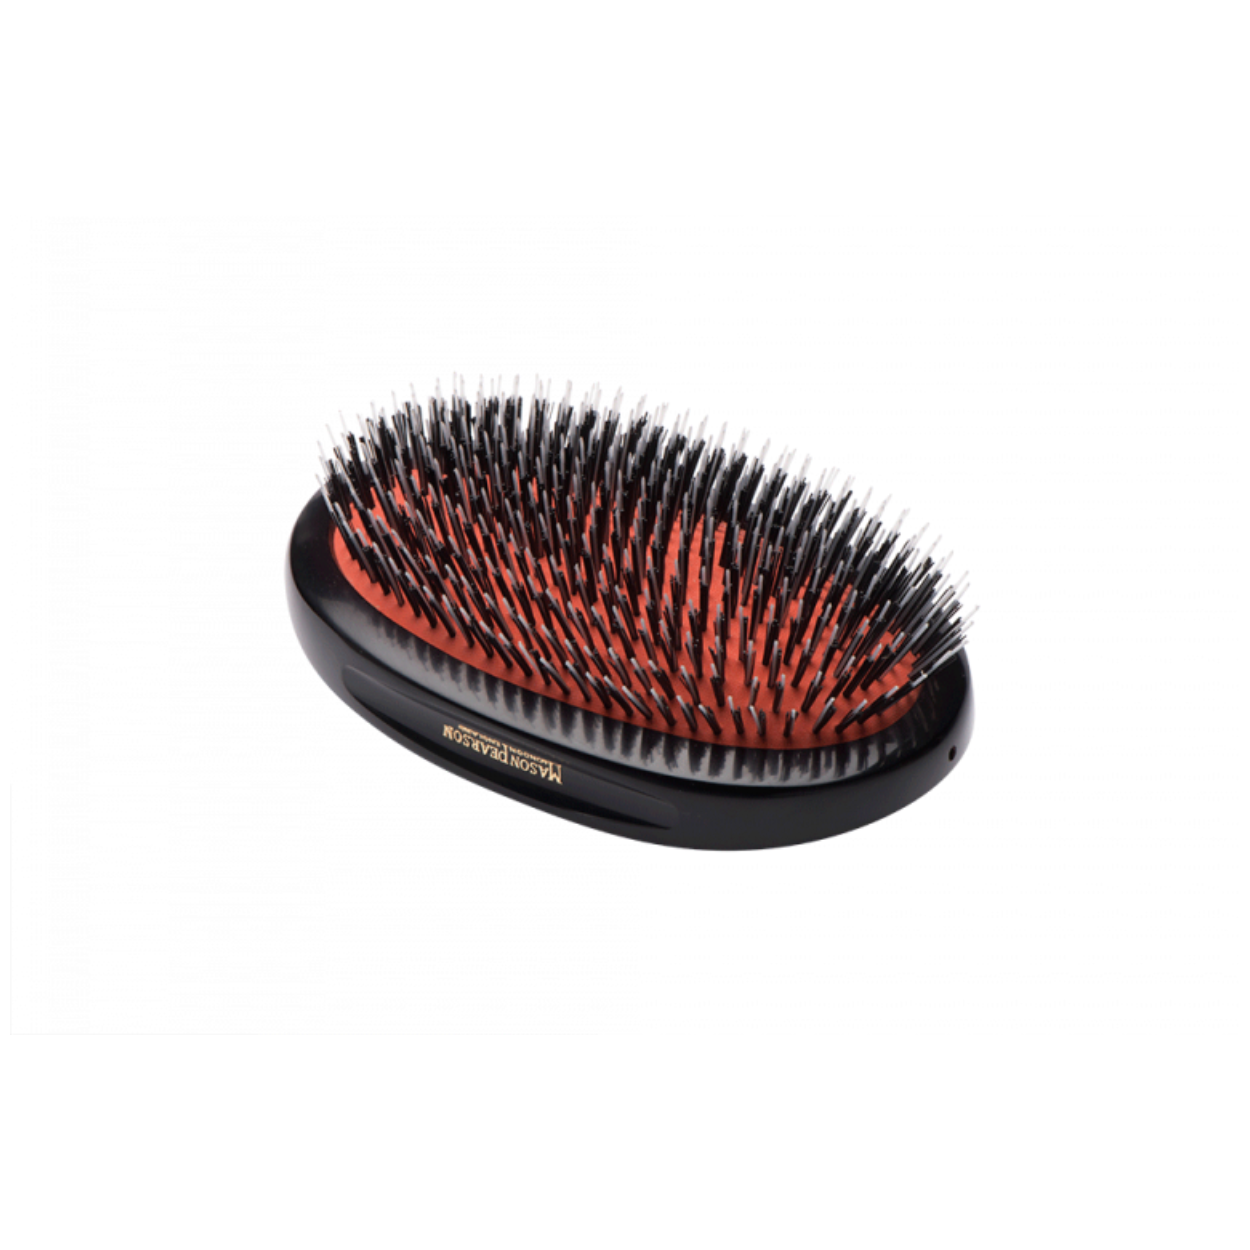 Military Popular Bristle & Nylon Hairbrush BN1M